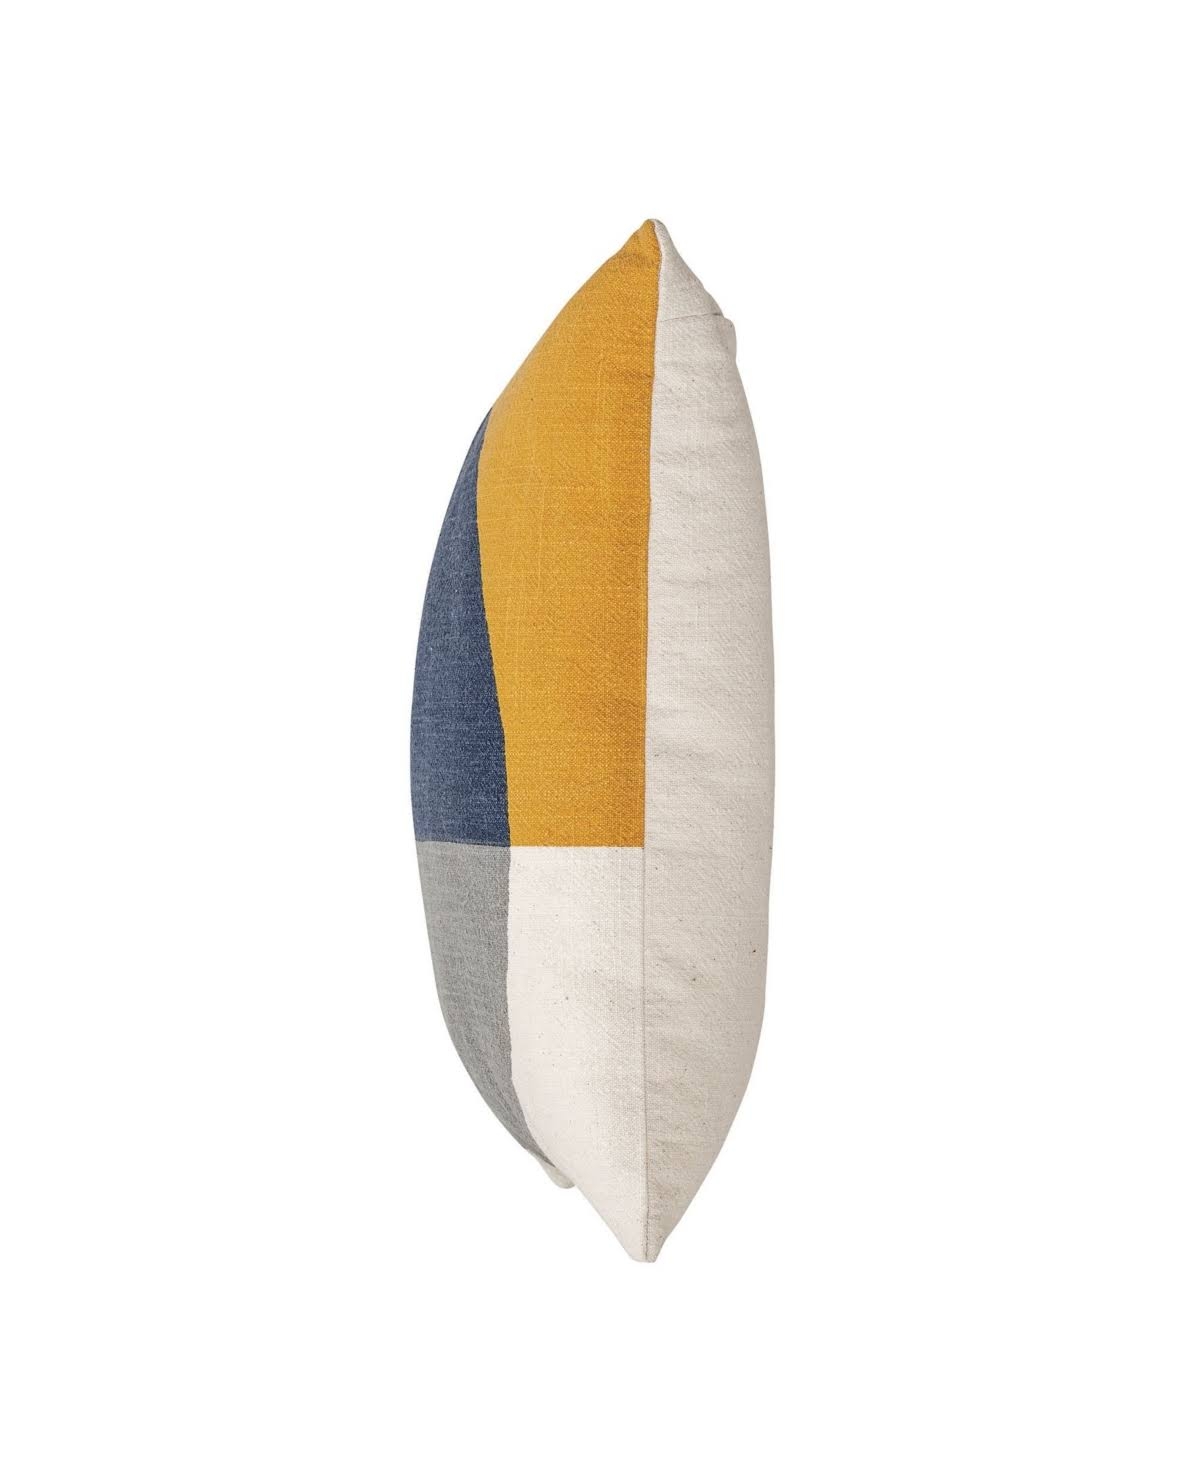 Geometric Printed Cotton Pillow, Mustard & Blue, 16" x 16" - Image 2